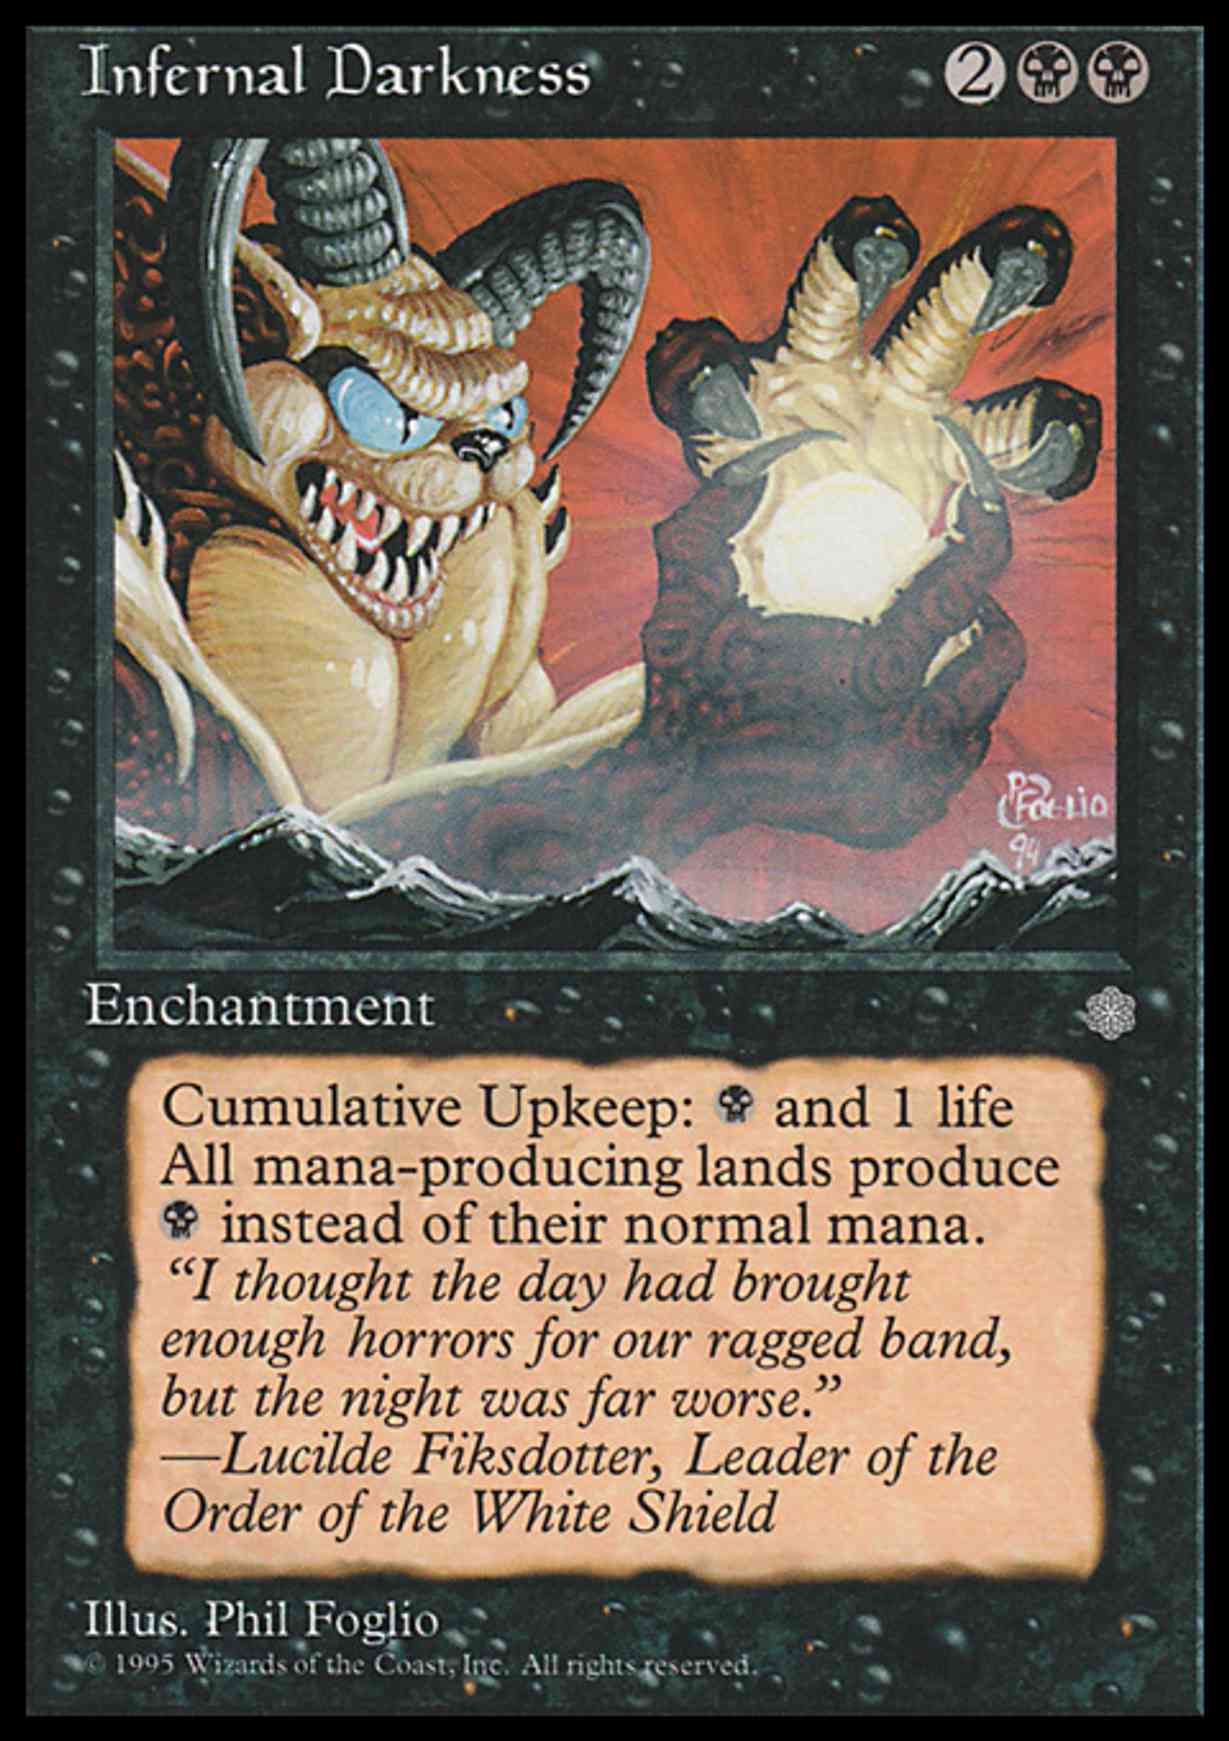 Infernal Darkness magic card front